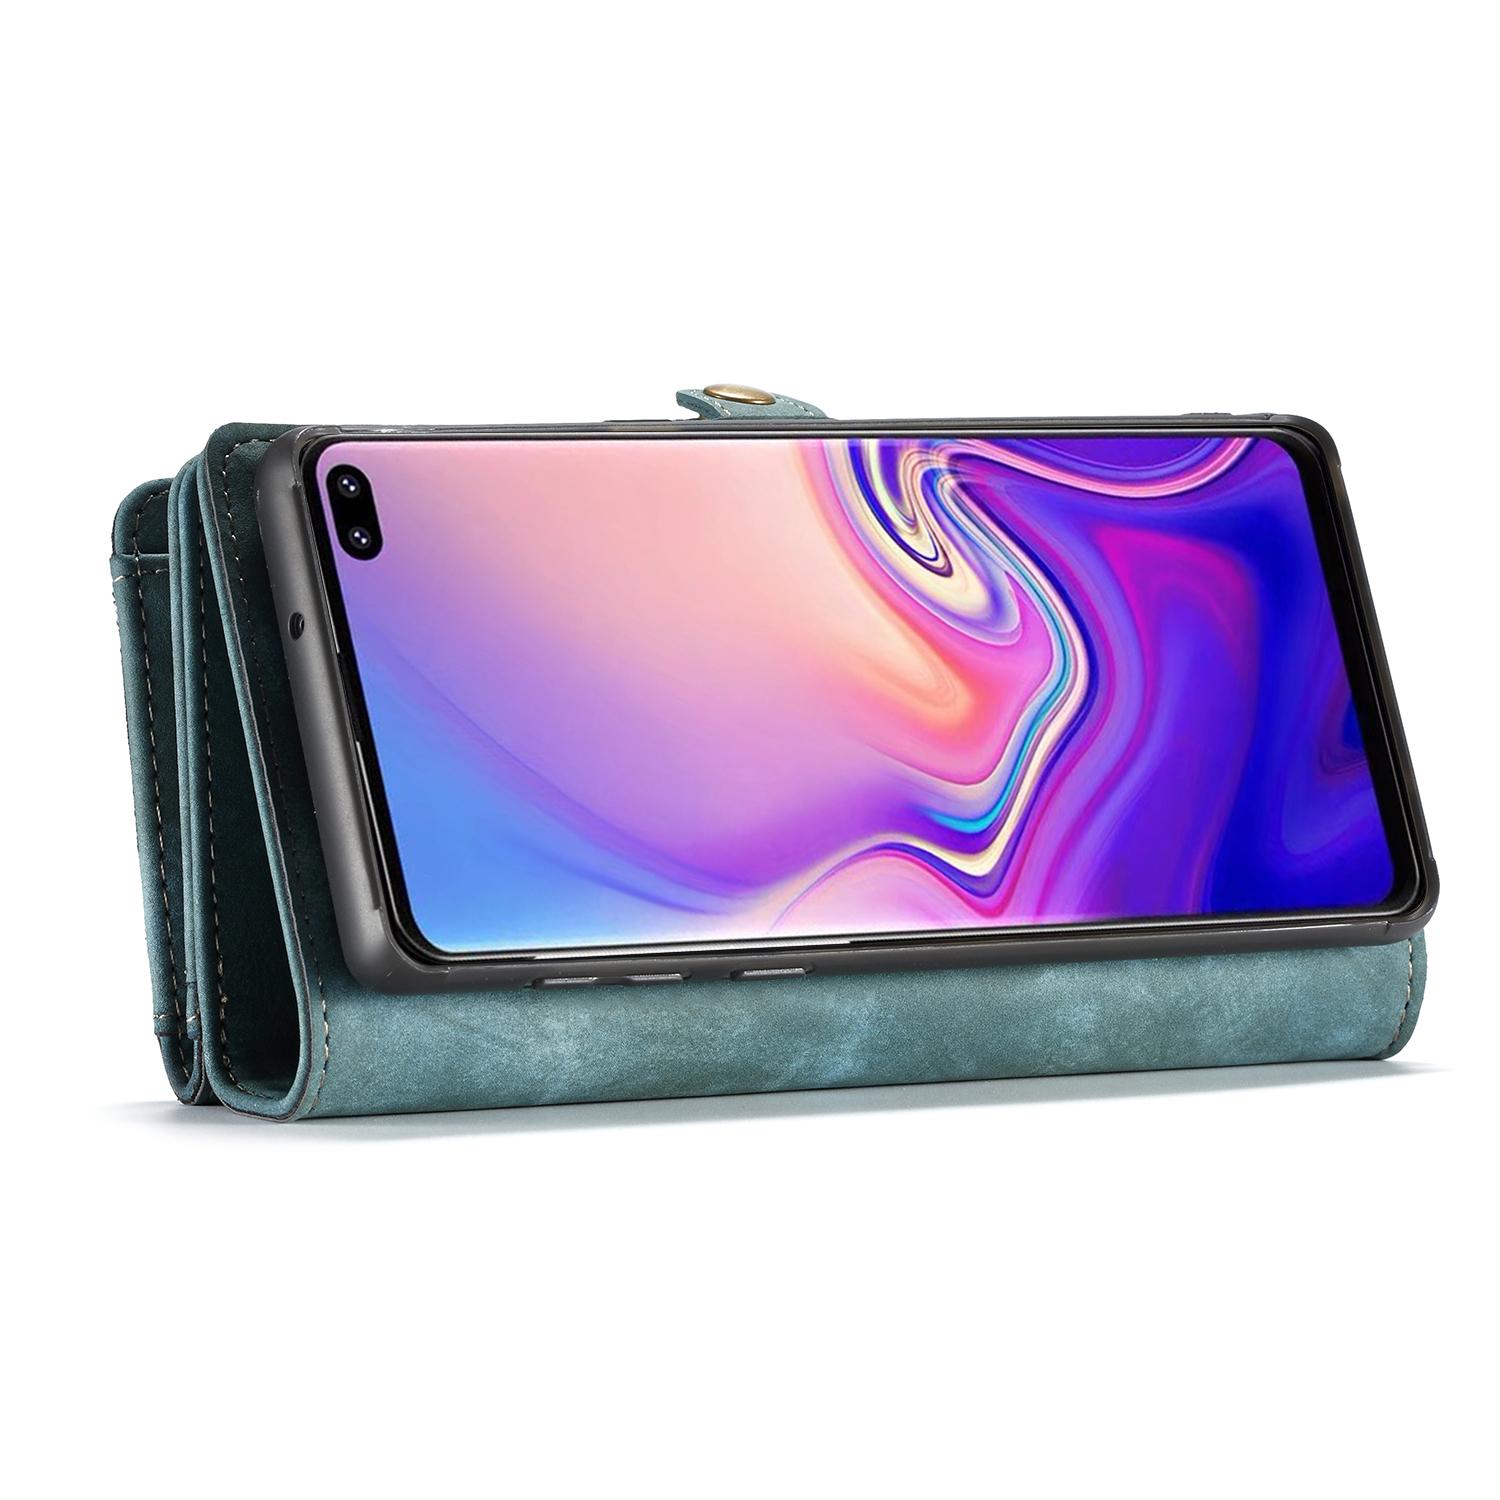 Samsung Galaxy S10 Plus Multi-slot Wallet Case Blue